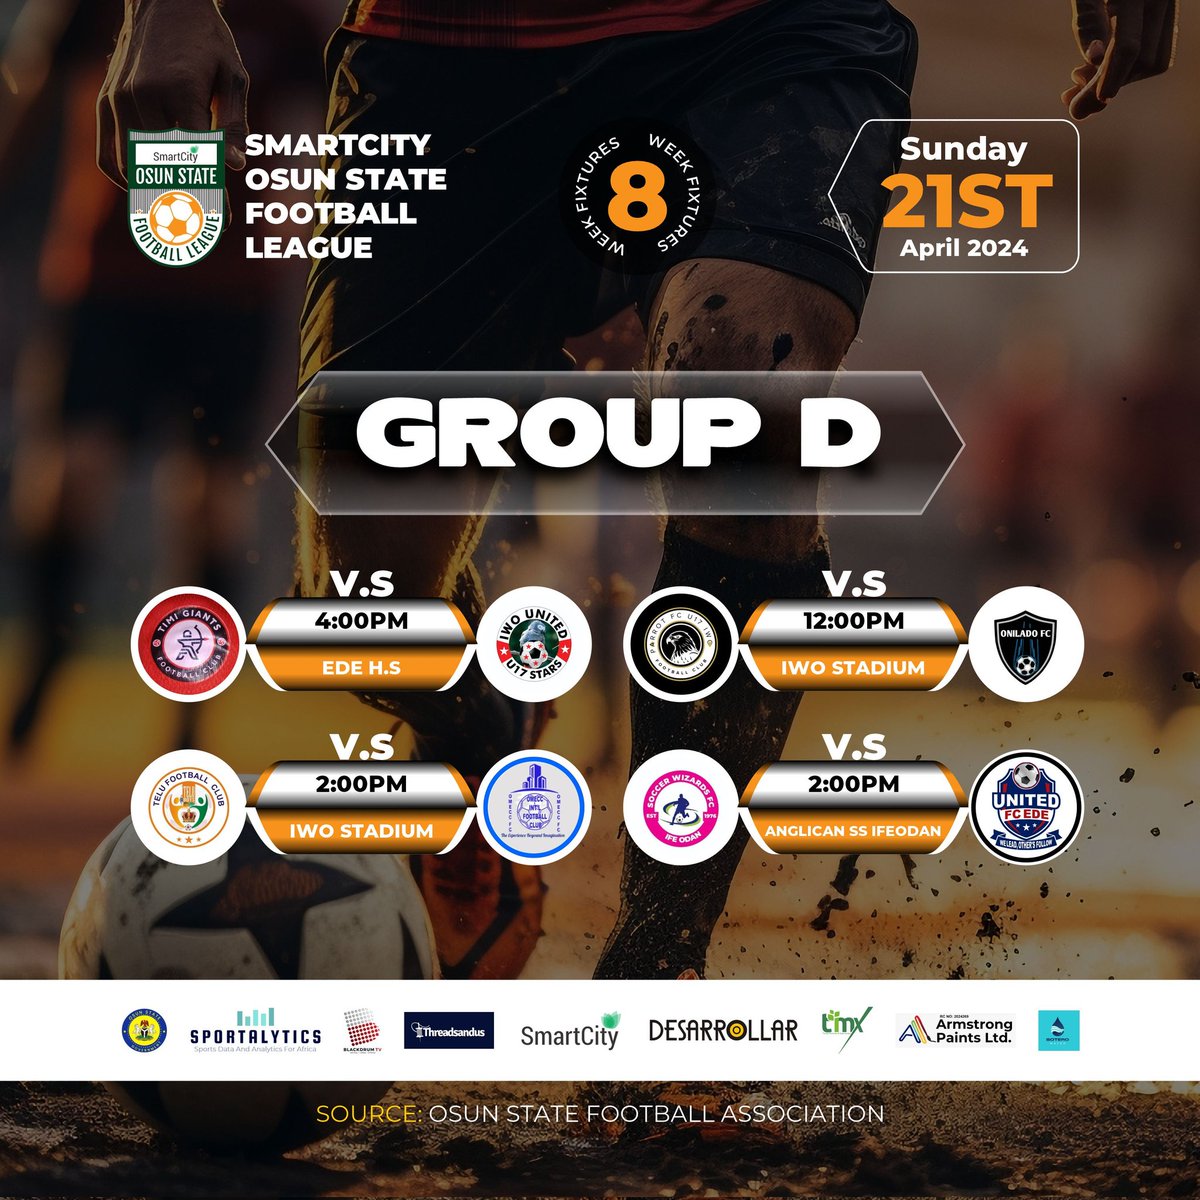 Smartcity Osun State Football League
Week 8 fixtures 
Group D
@telufc @OsunFa @SmartCityOSFL